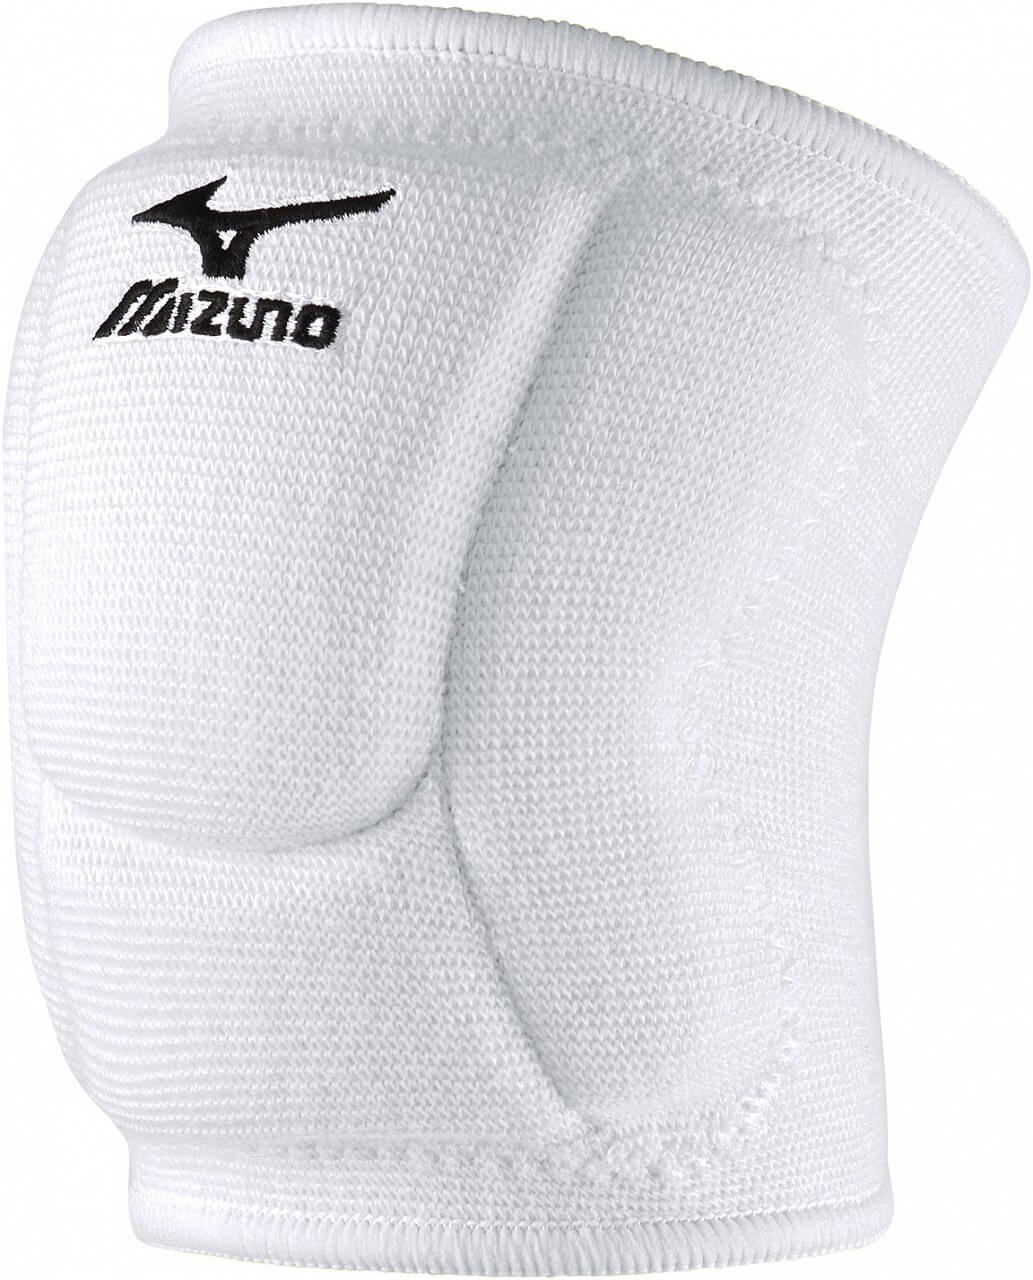 Une paire de rotules Mizuno VS1 Compact kneepad